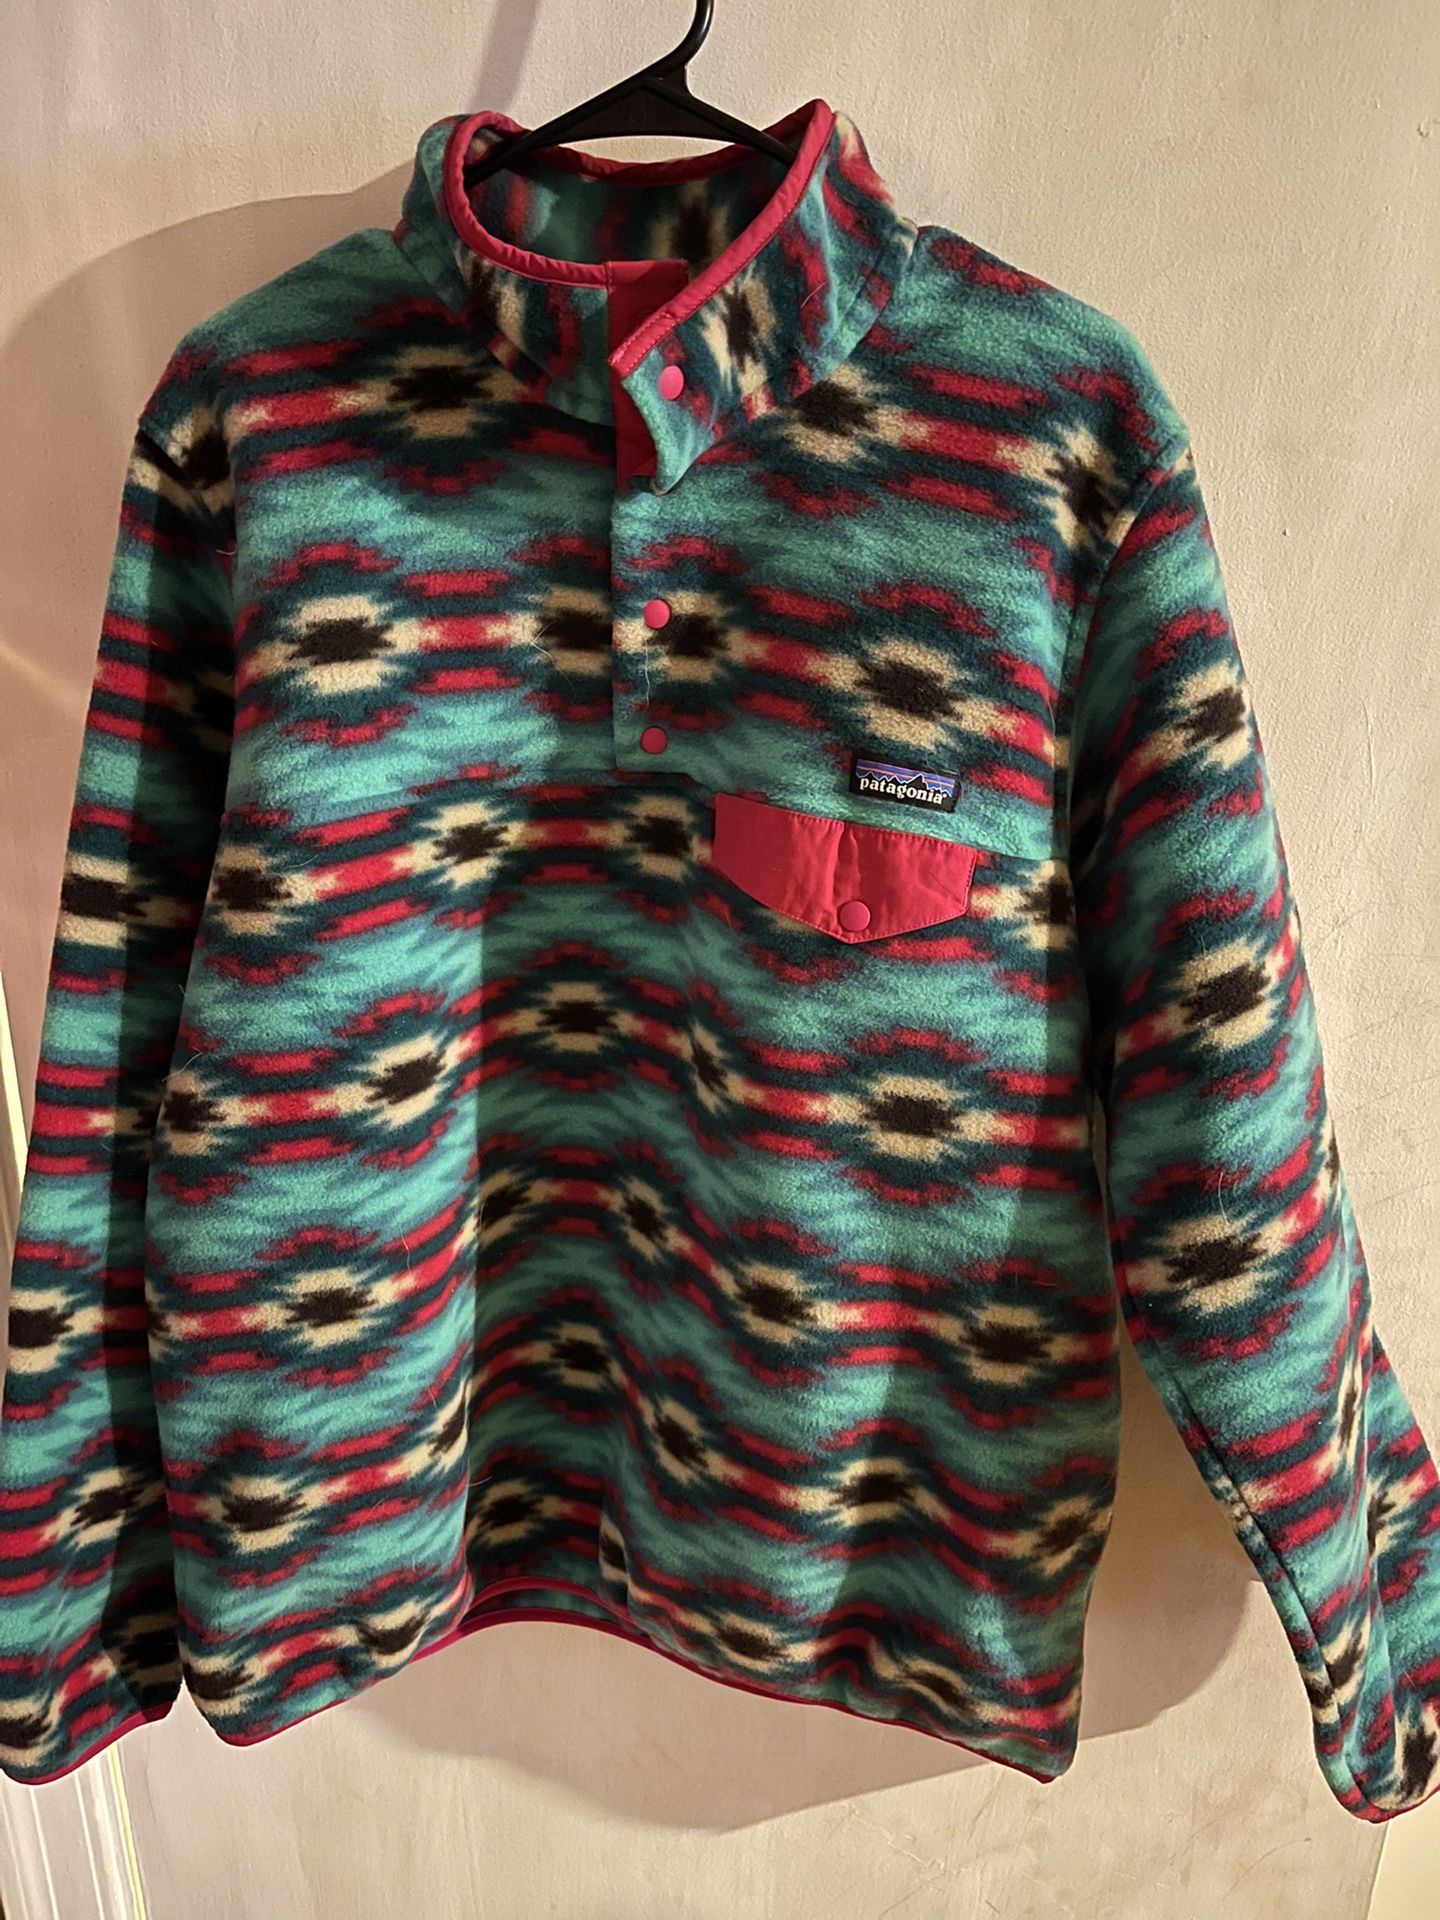 Women’s Patagonia Fleece Jacket 